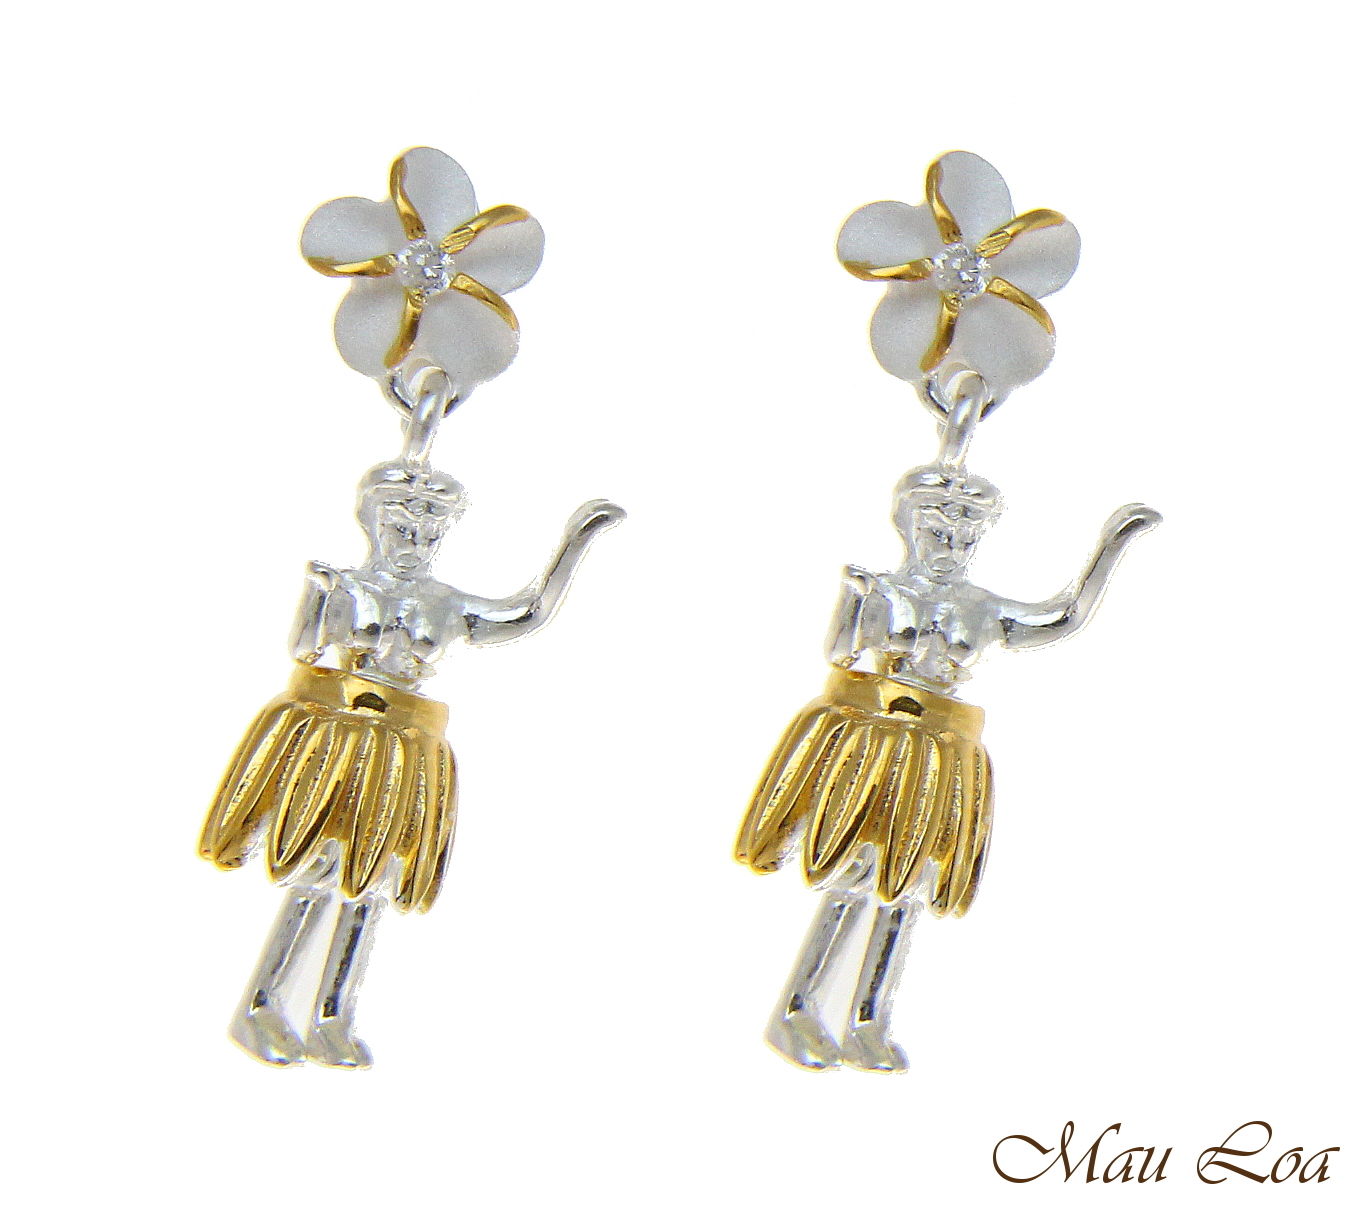 925 Silver Hawaiian Hula Girl Plumeria Flower 2T Yellow Gold Post Stud Earrings